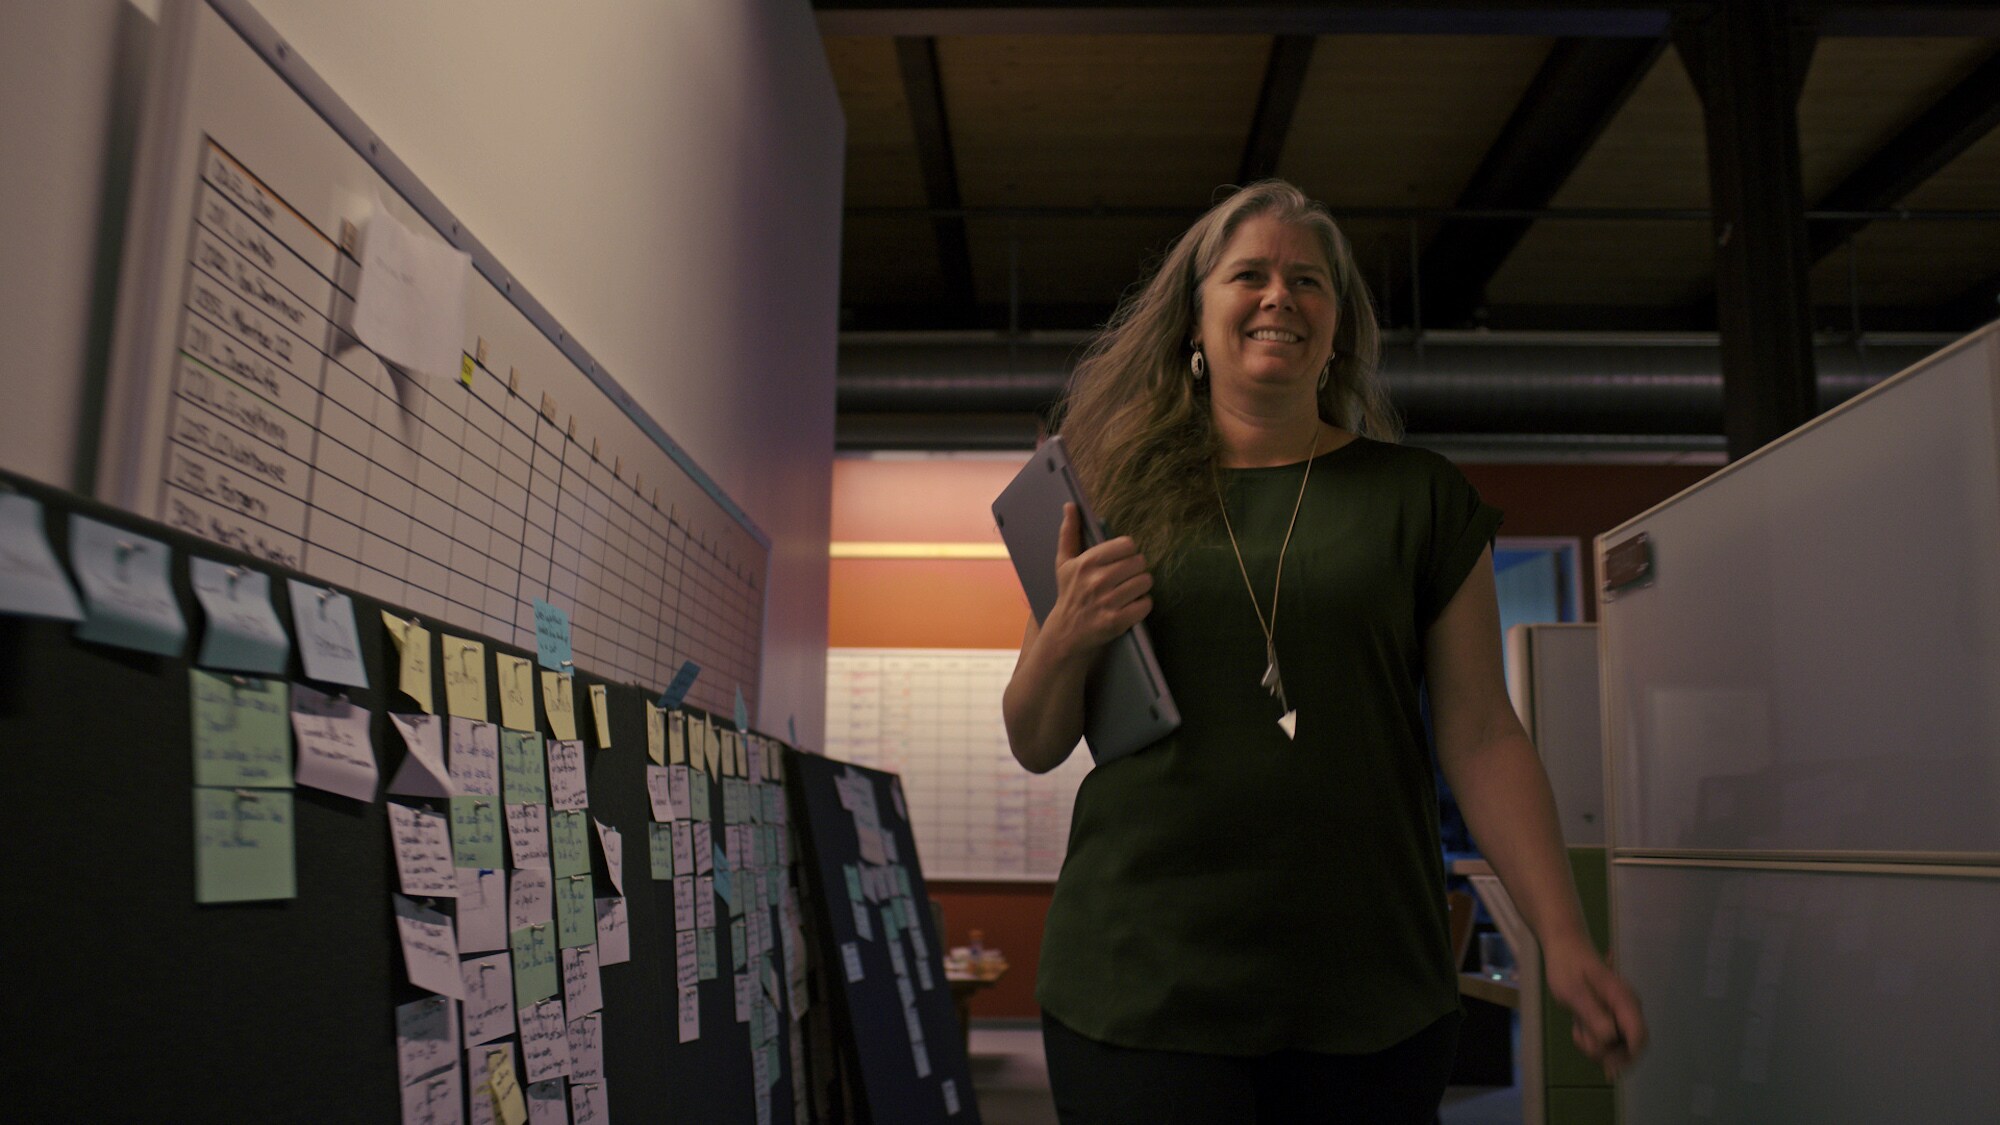 Jessica Heidt explains the program she created to improve gender balance in Pixar films.